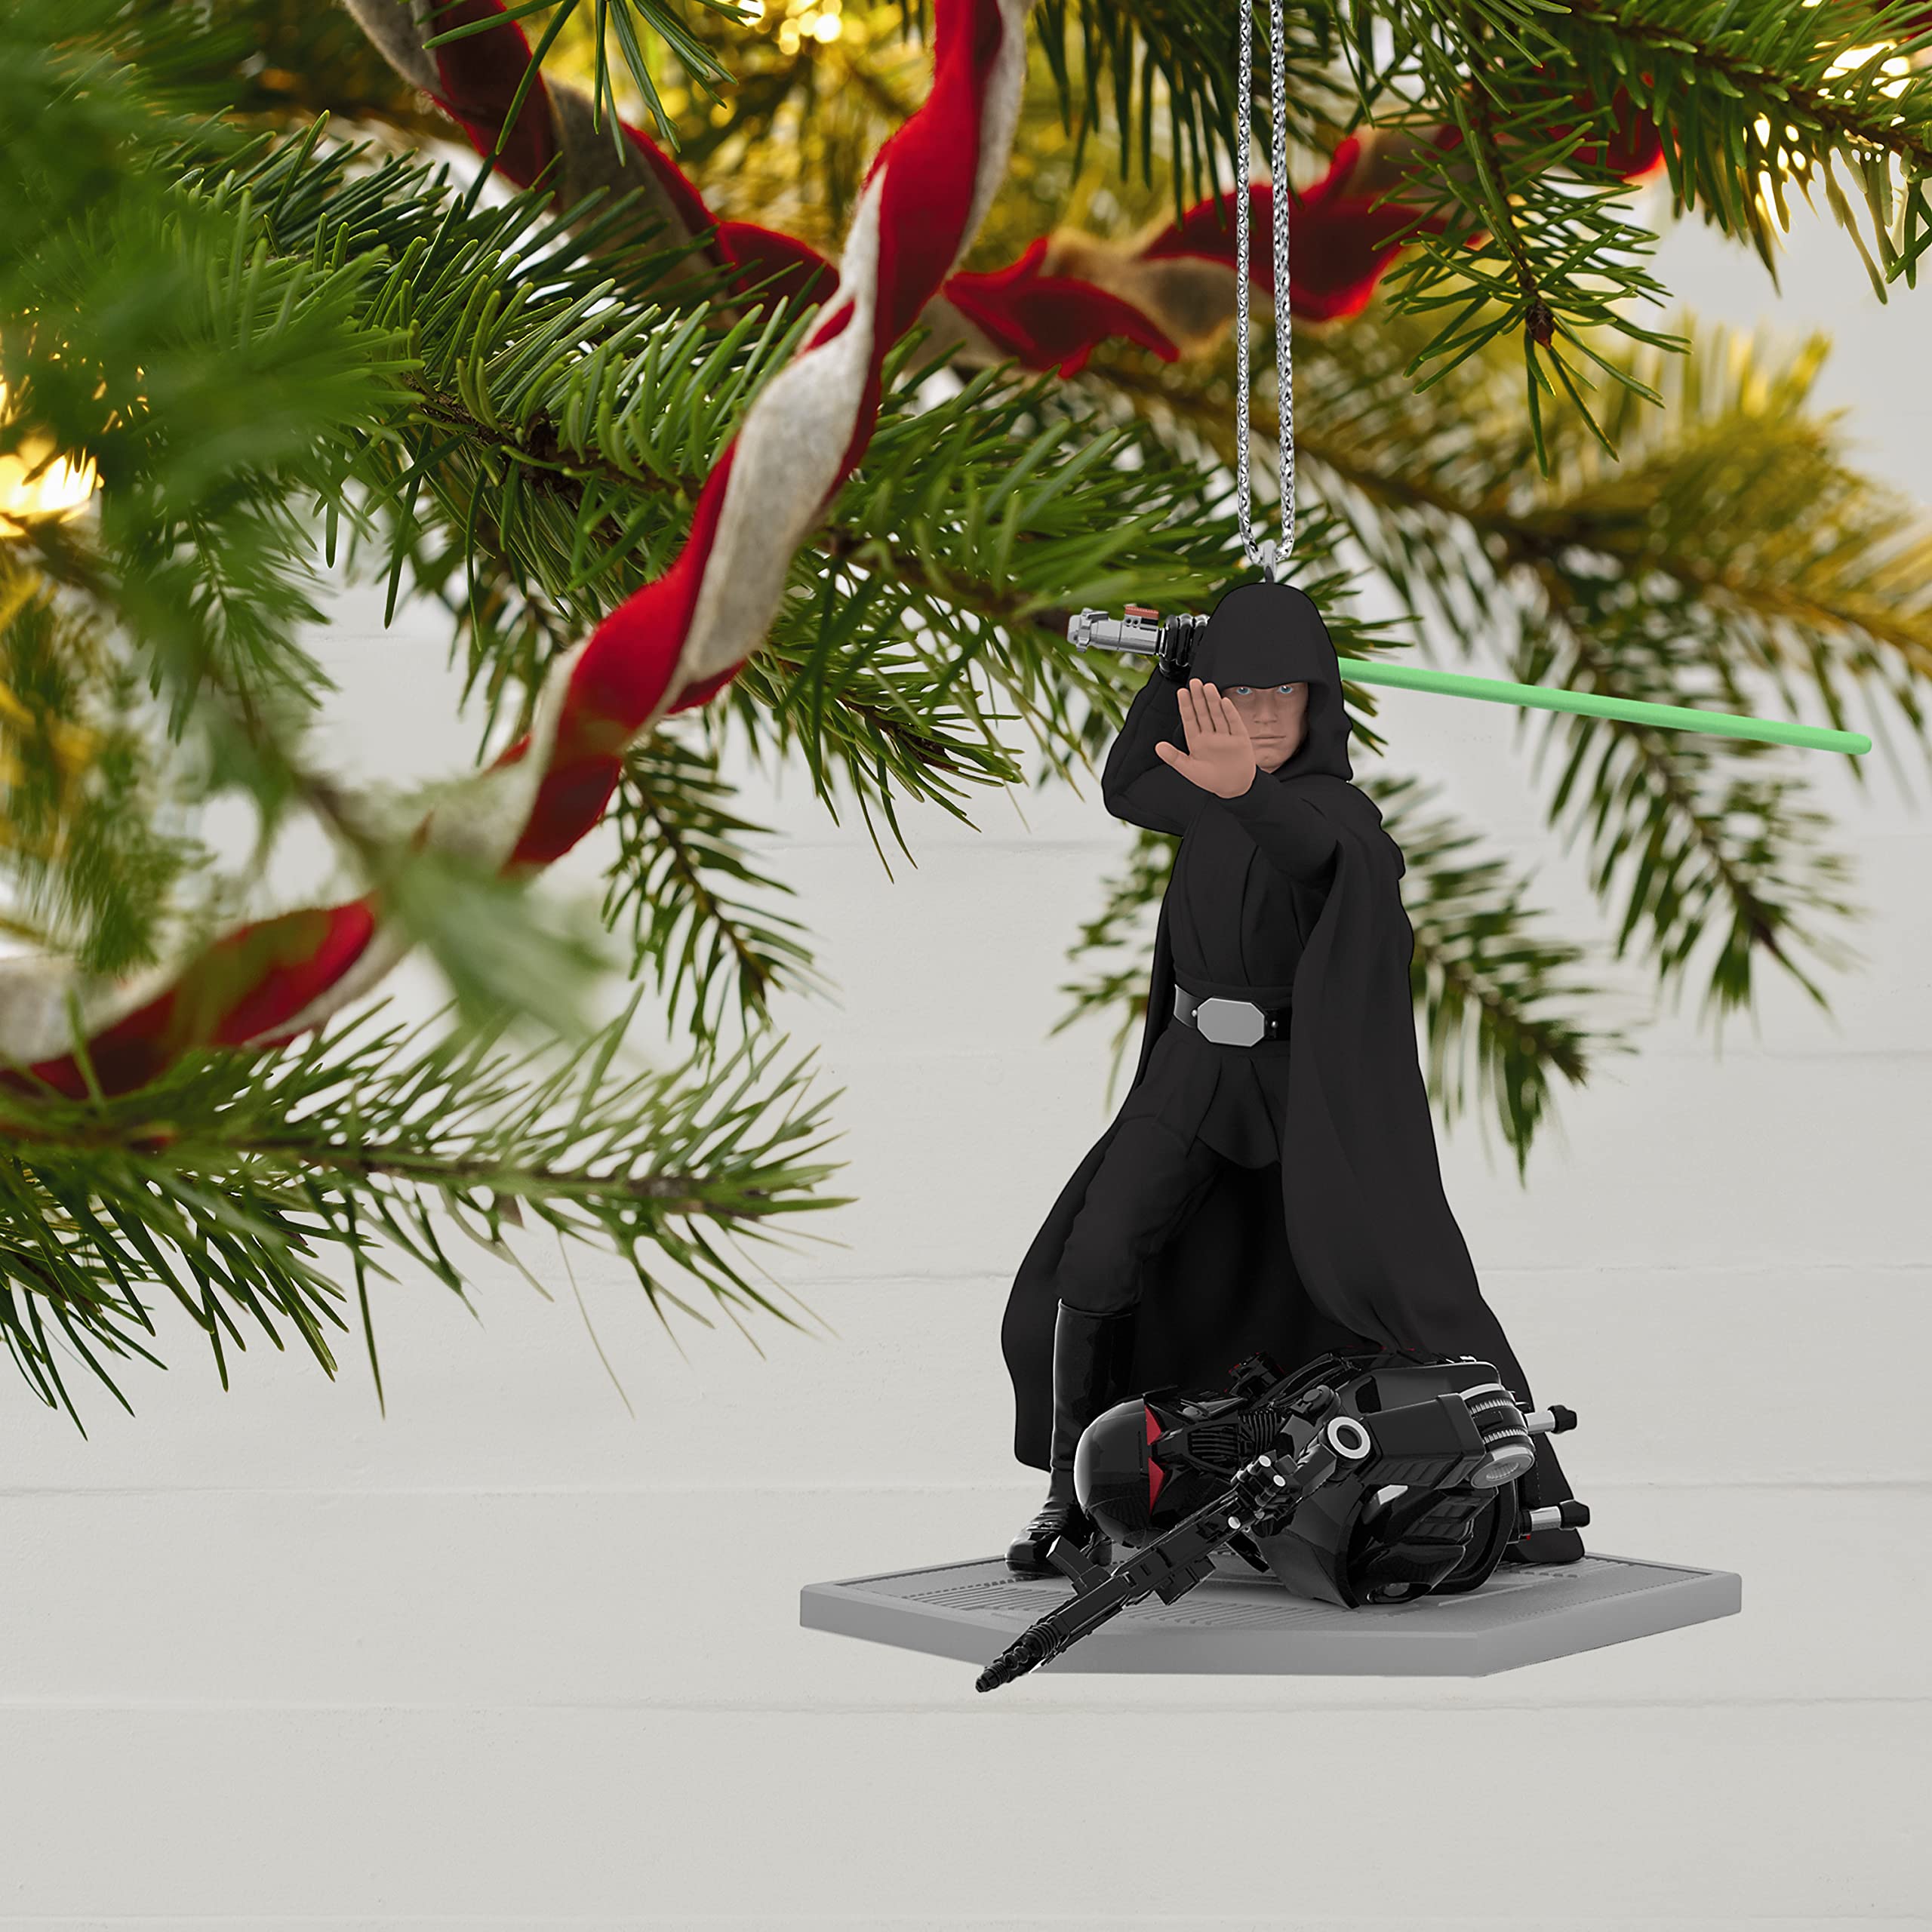 Hallmark Keepsake Christmas Ornament 2020, Star Wars